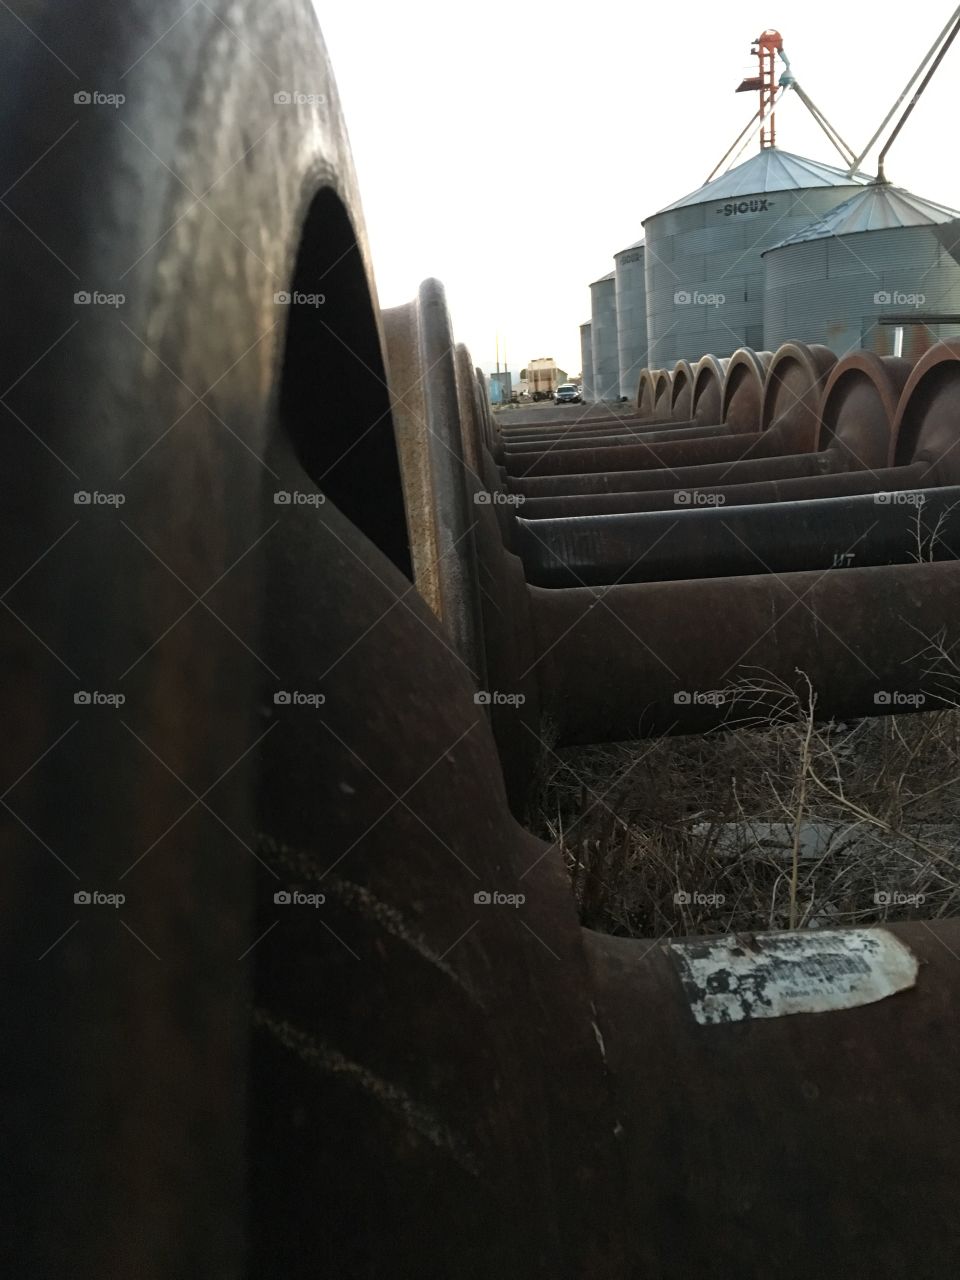 Several old wheels abandoned near grain silos